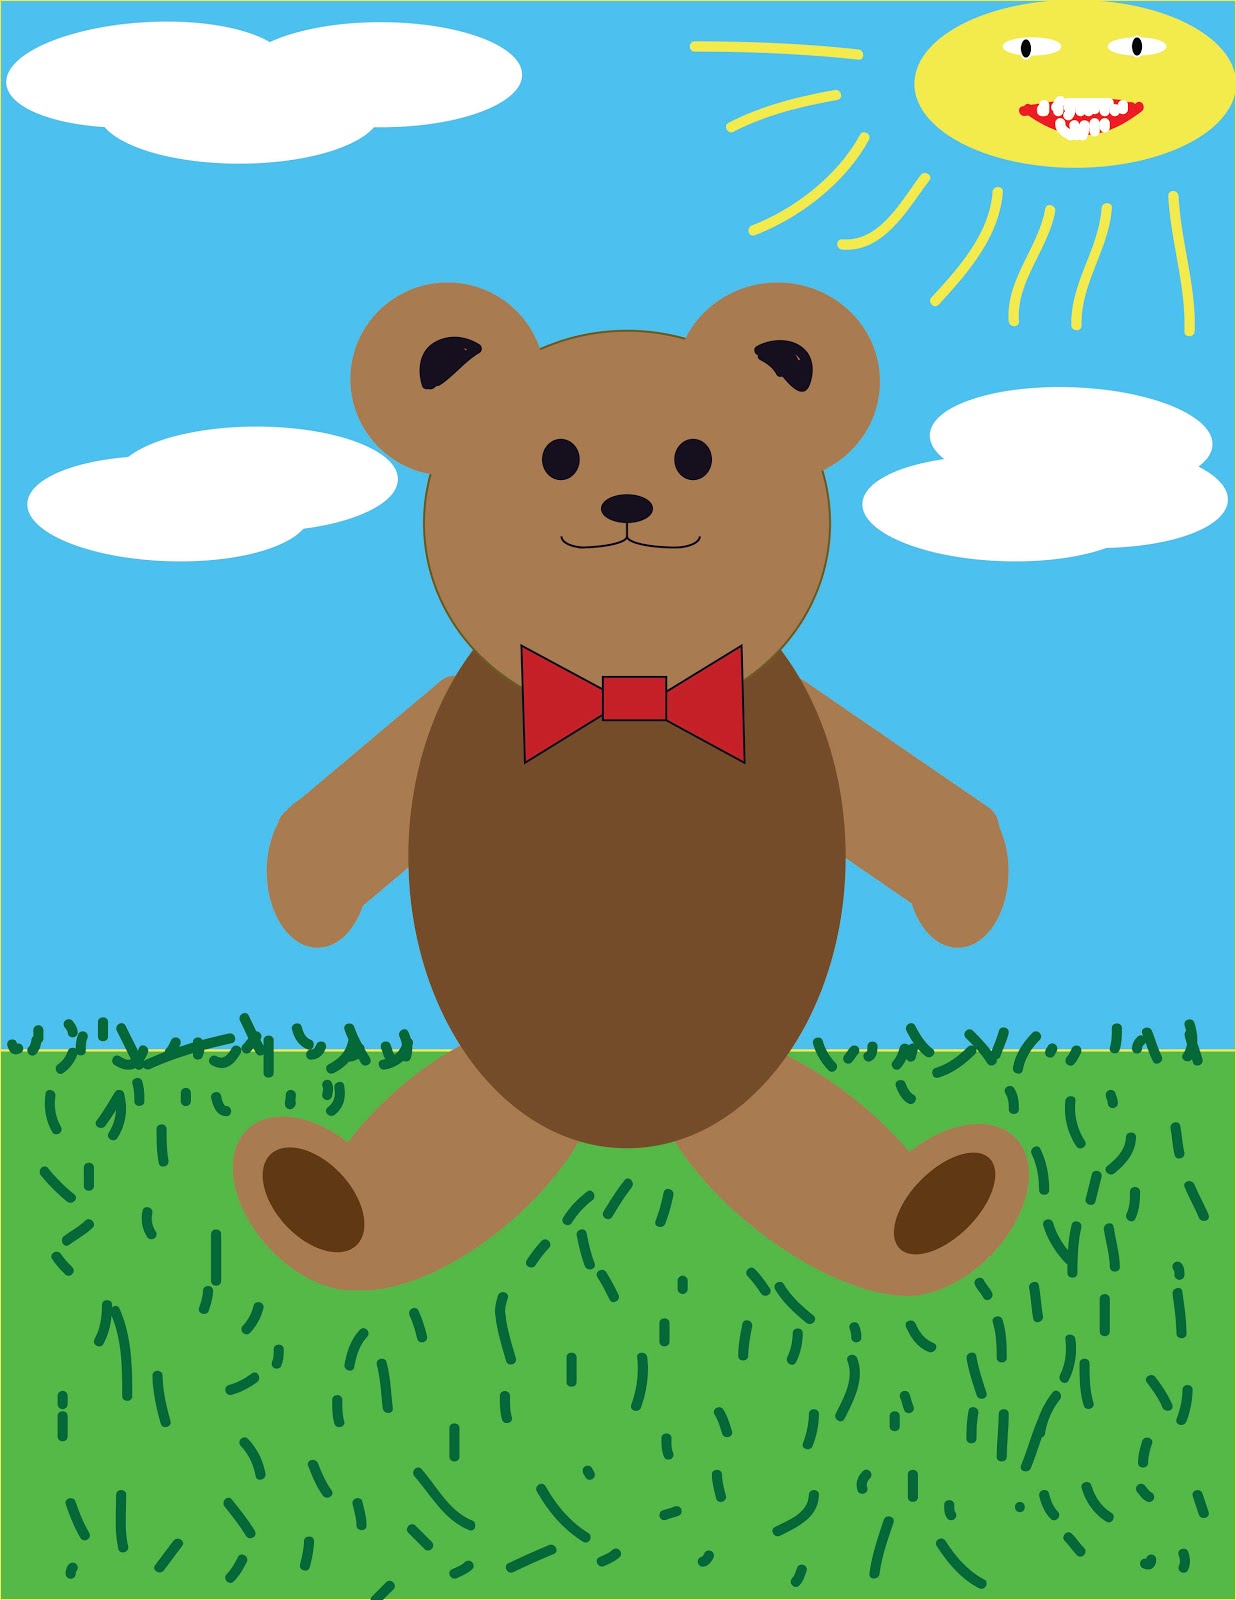 Nick S Blog For Digital Arts Class Teddy Bear Adobe Illustrator 10 18